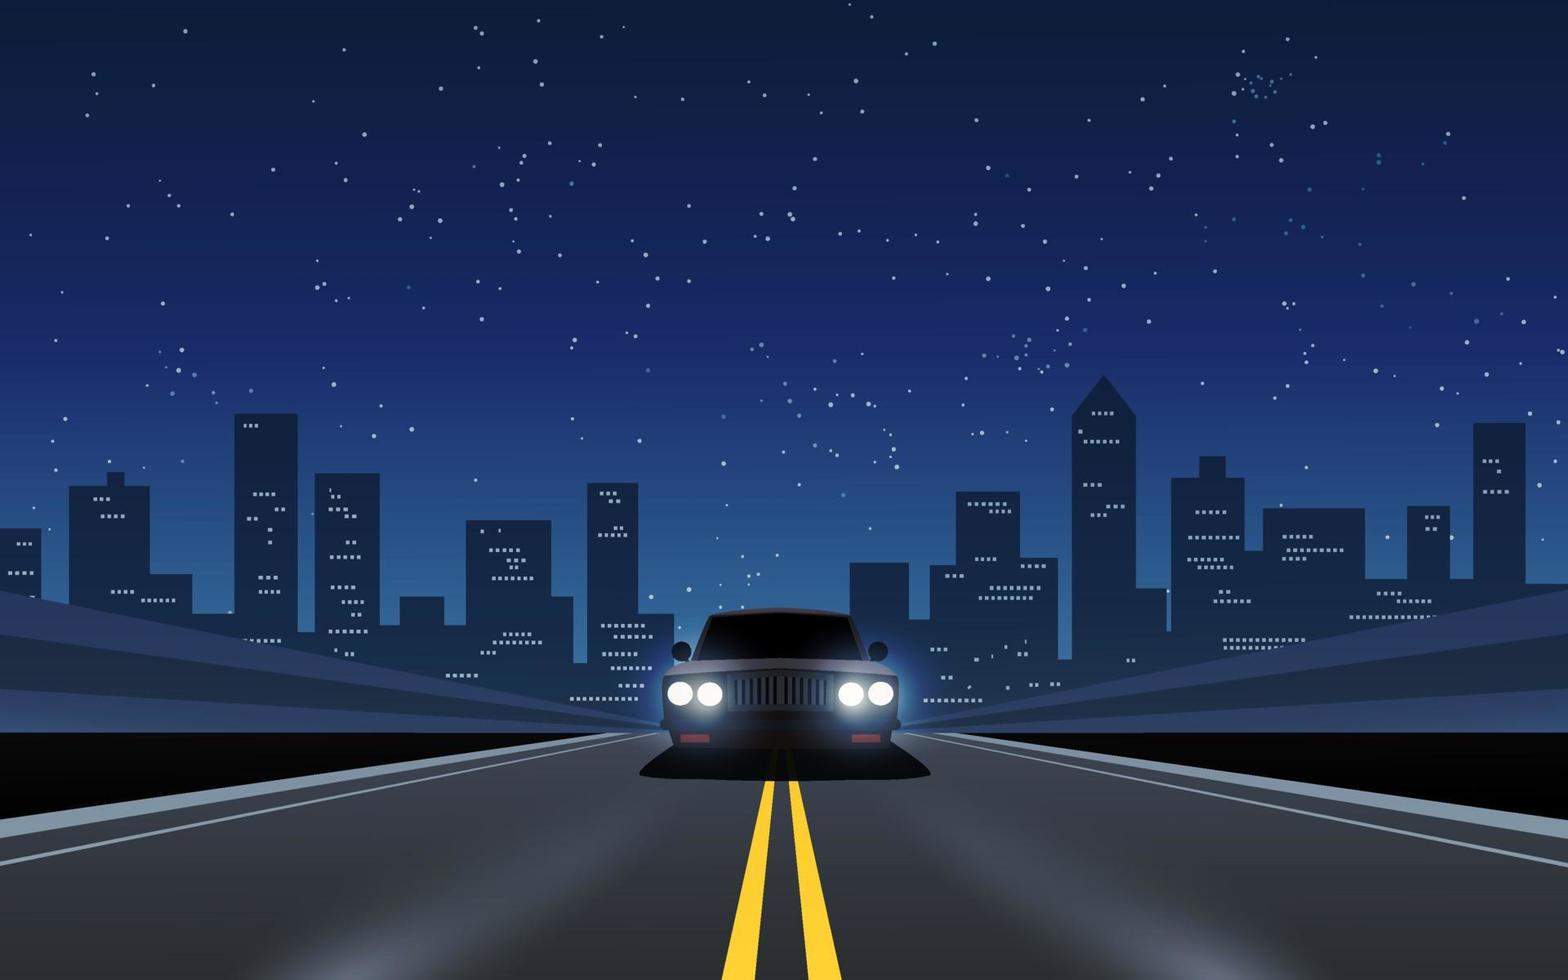 https://static.vecteezy.com/ti/gratis-vektor/p1/9443753-city-night-highway-illustration-with-a-car-and-starry-sky-vektor.jpg